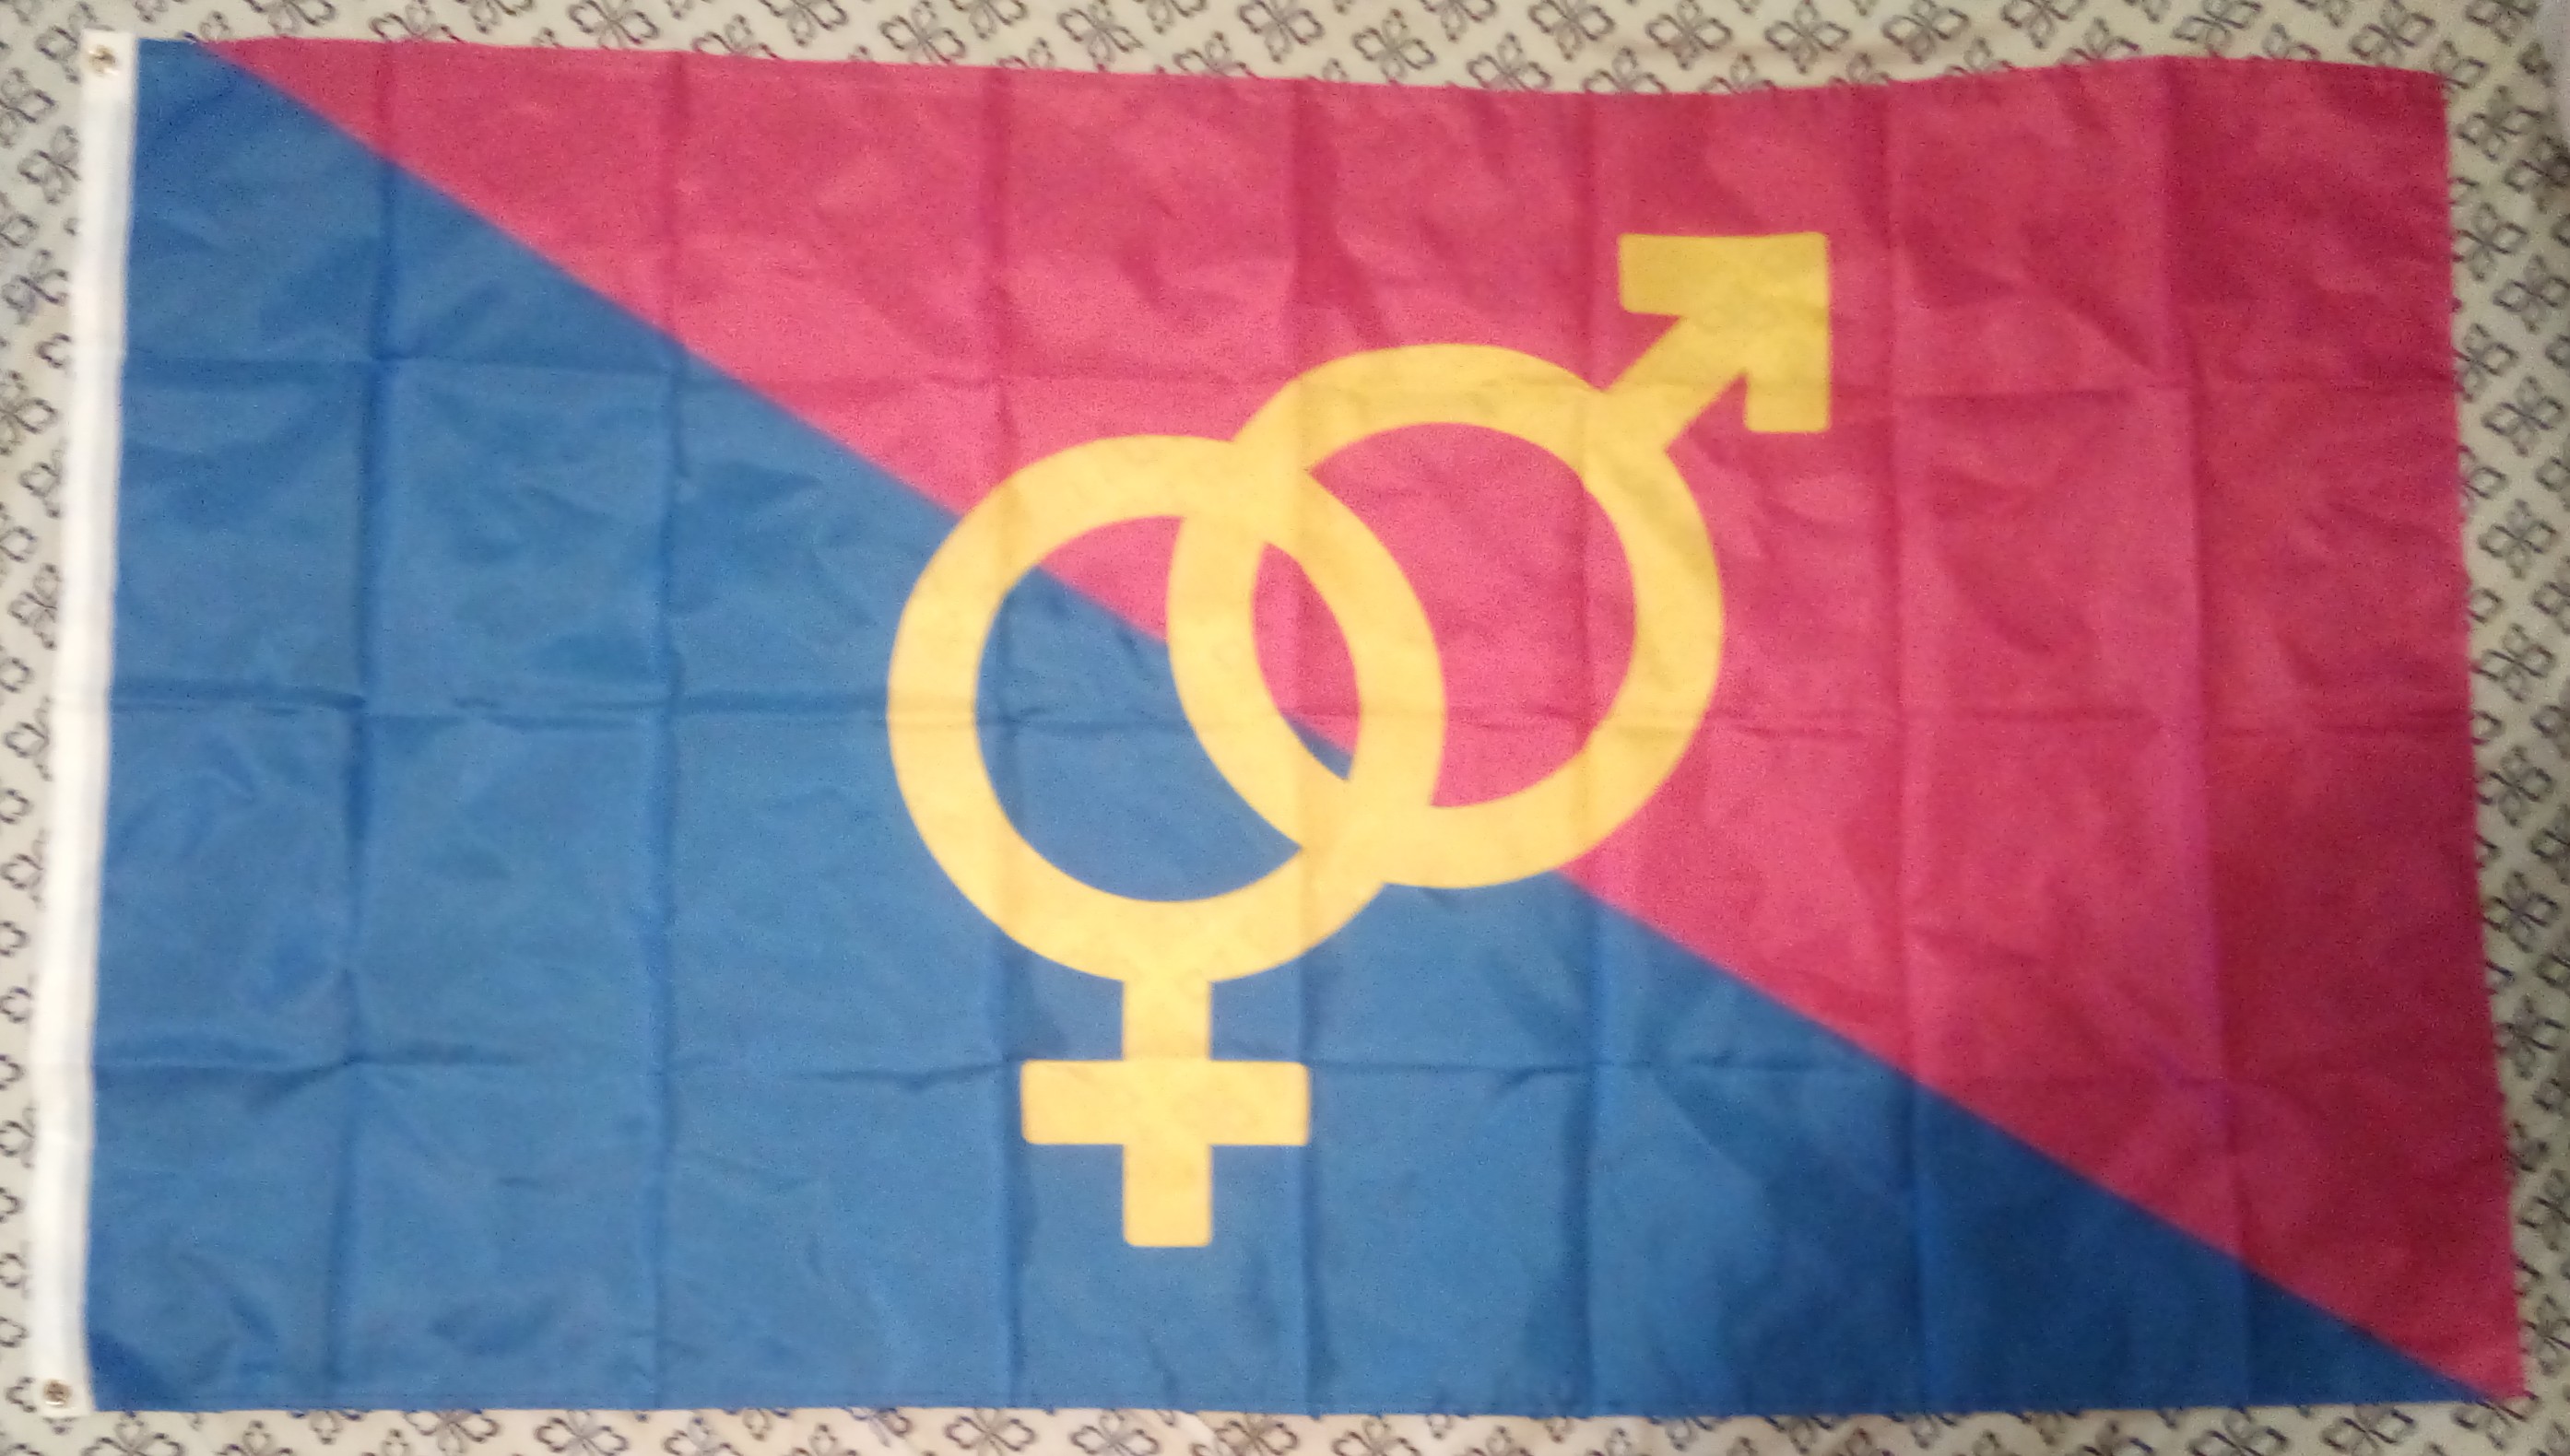 Straight Pride Flag